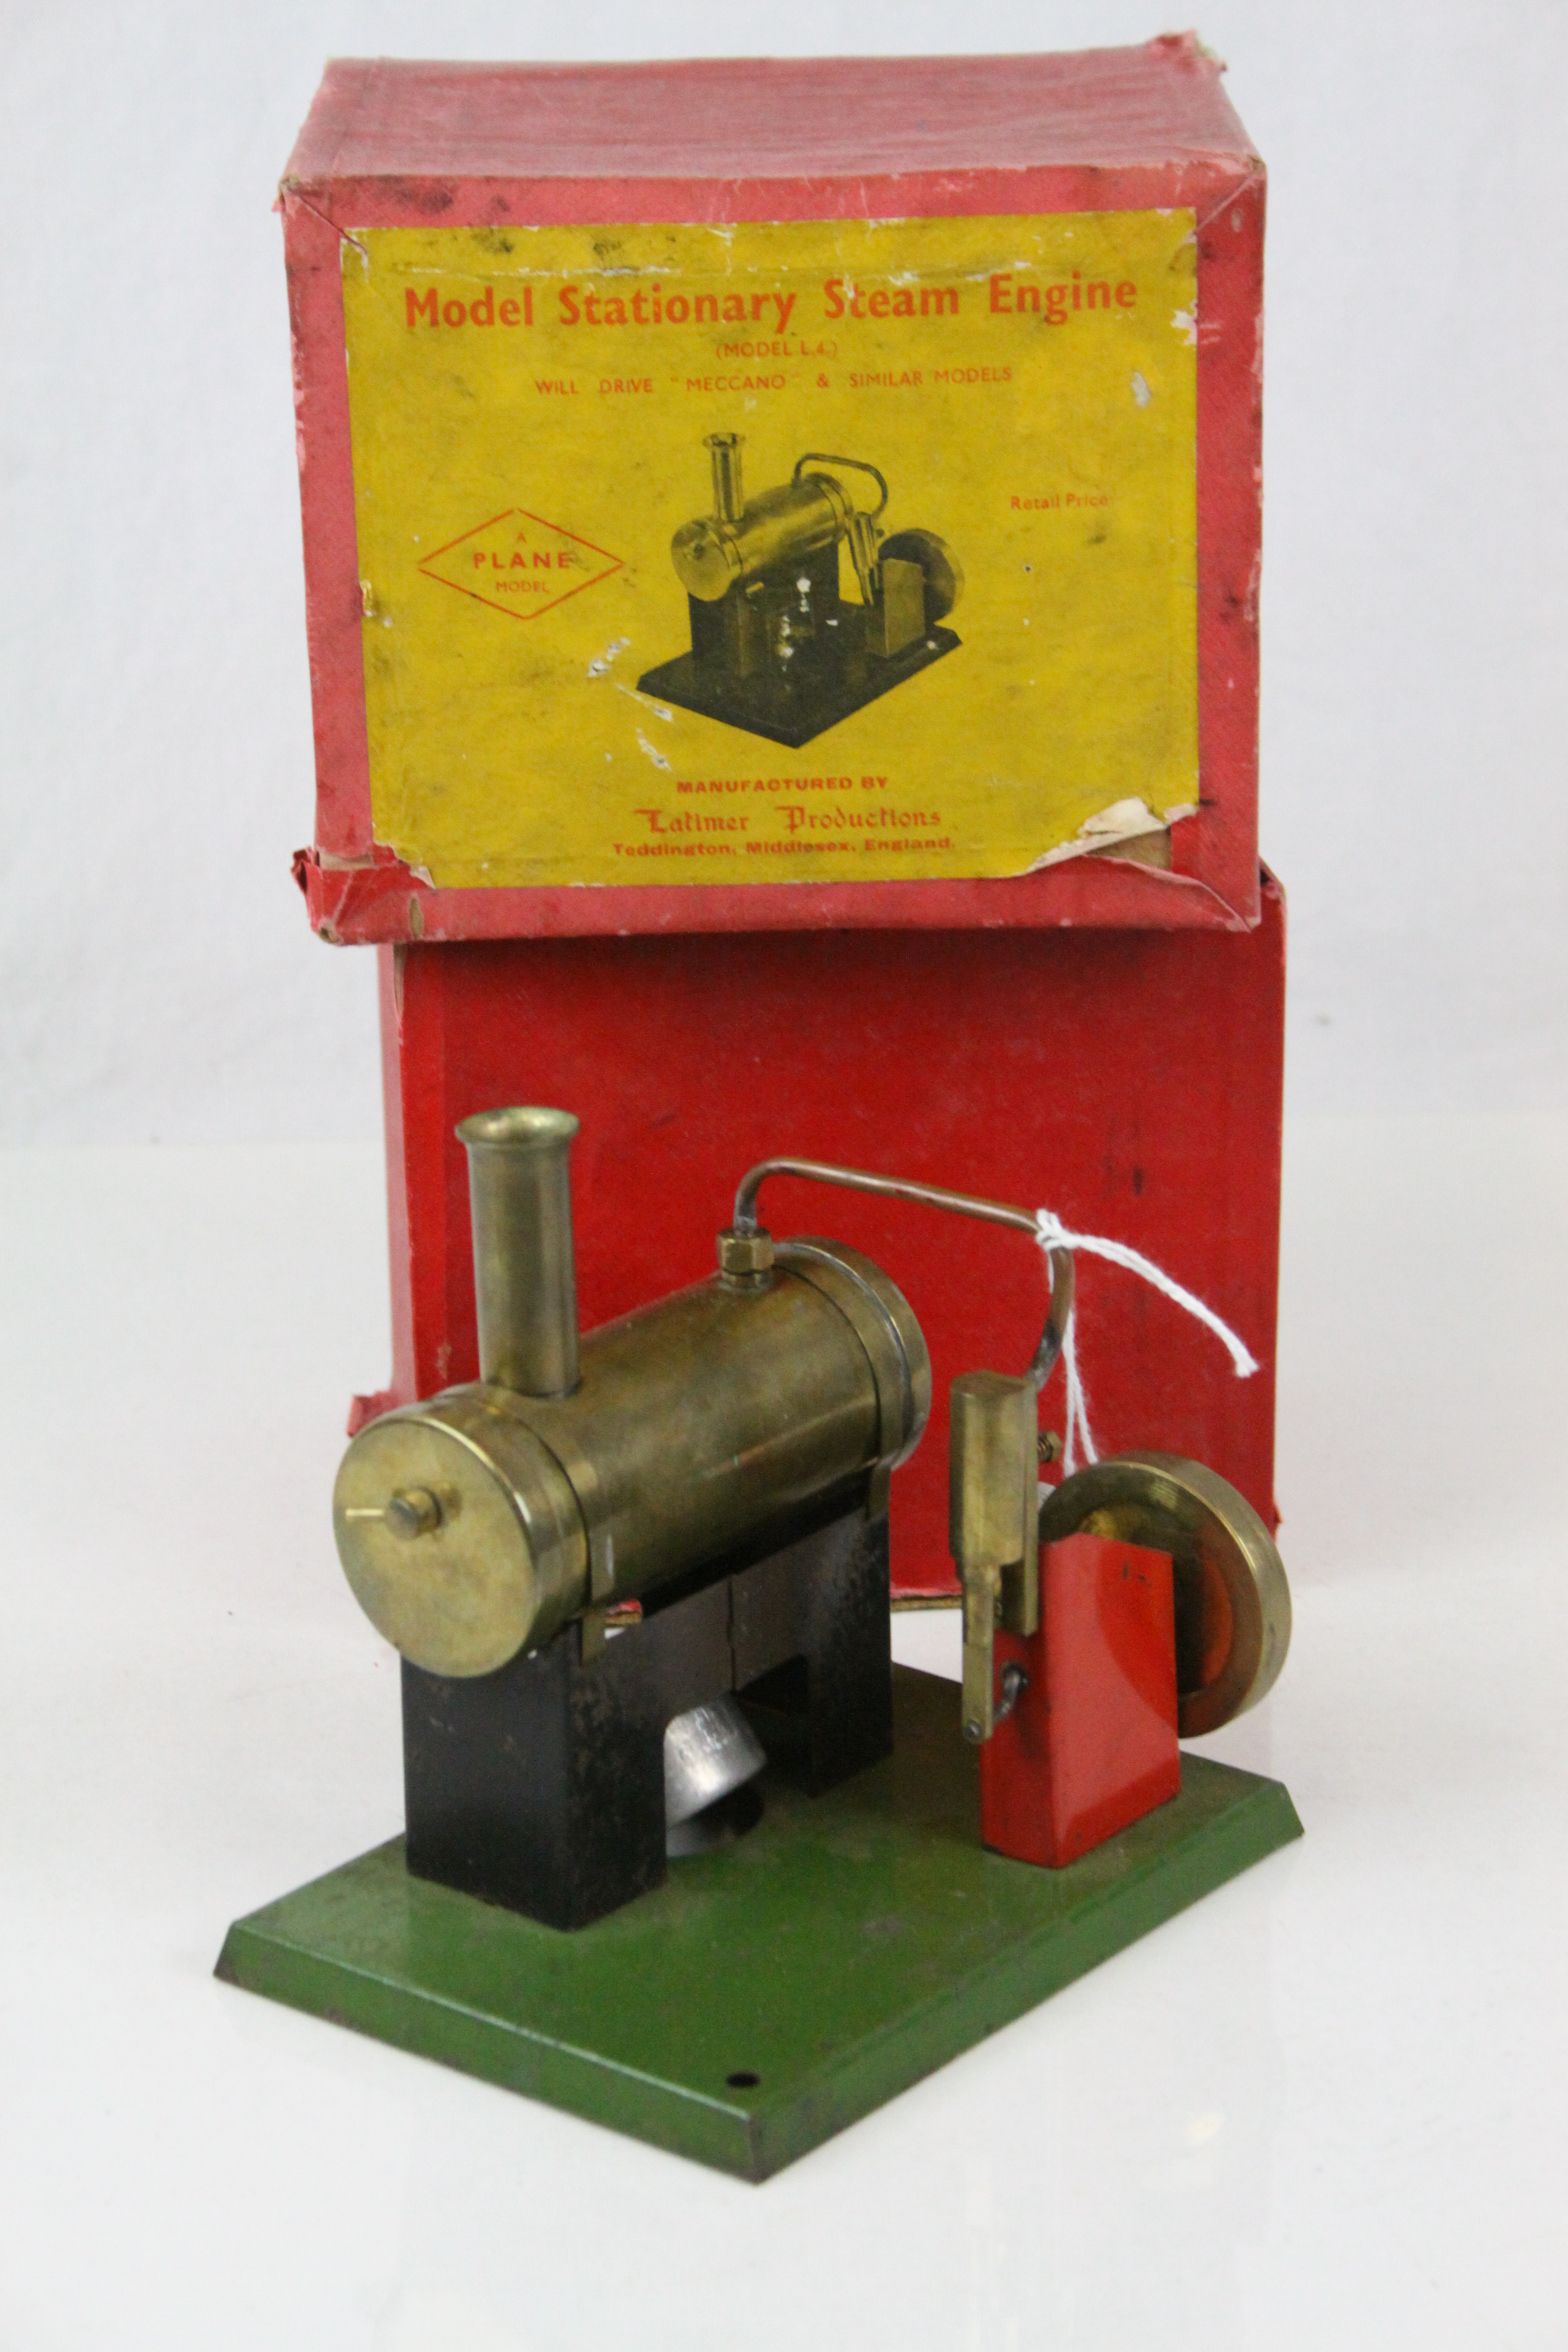 Boxed Latimer Productions Model Stationary Steam Engine, Plane Model